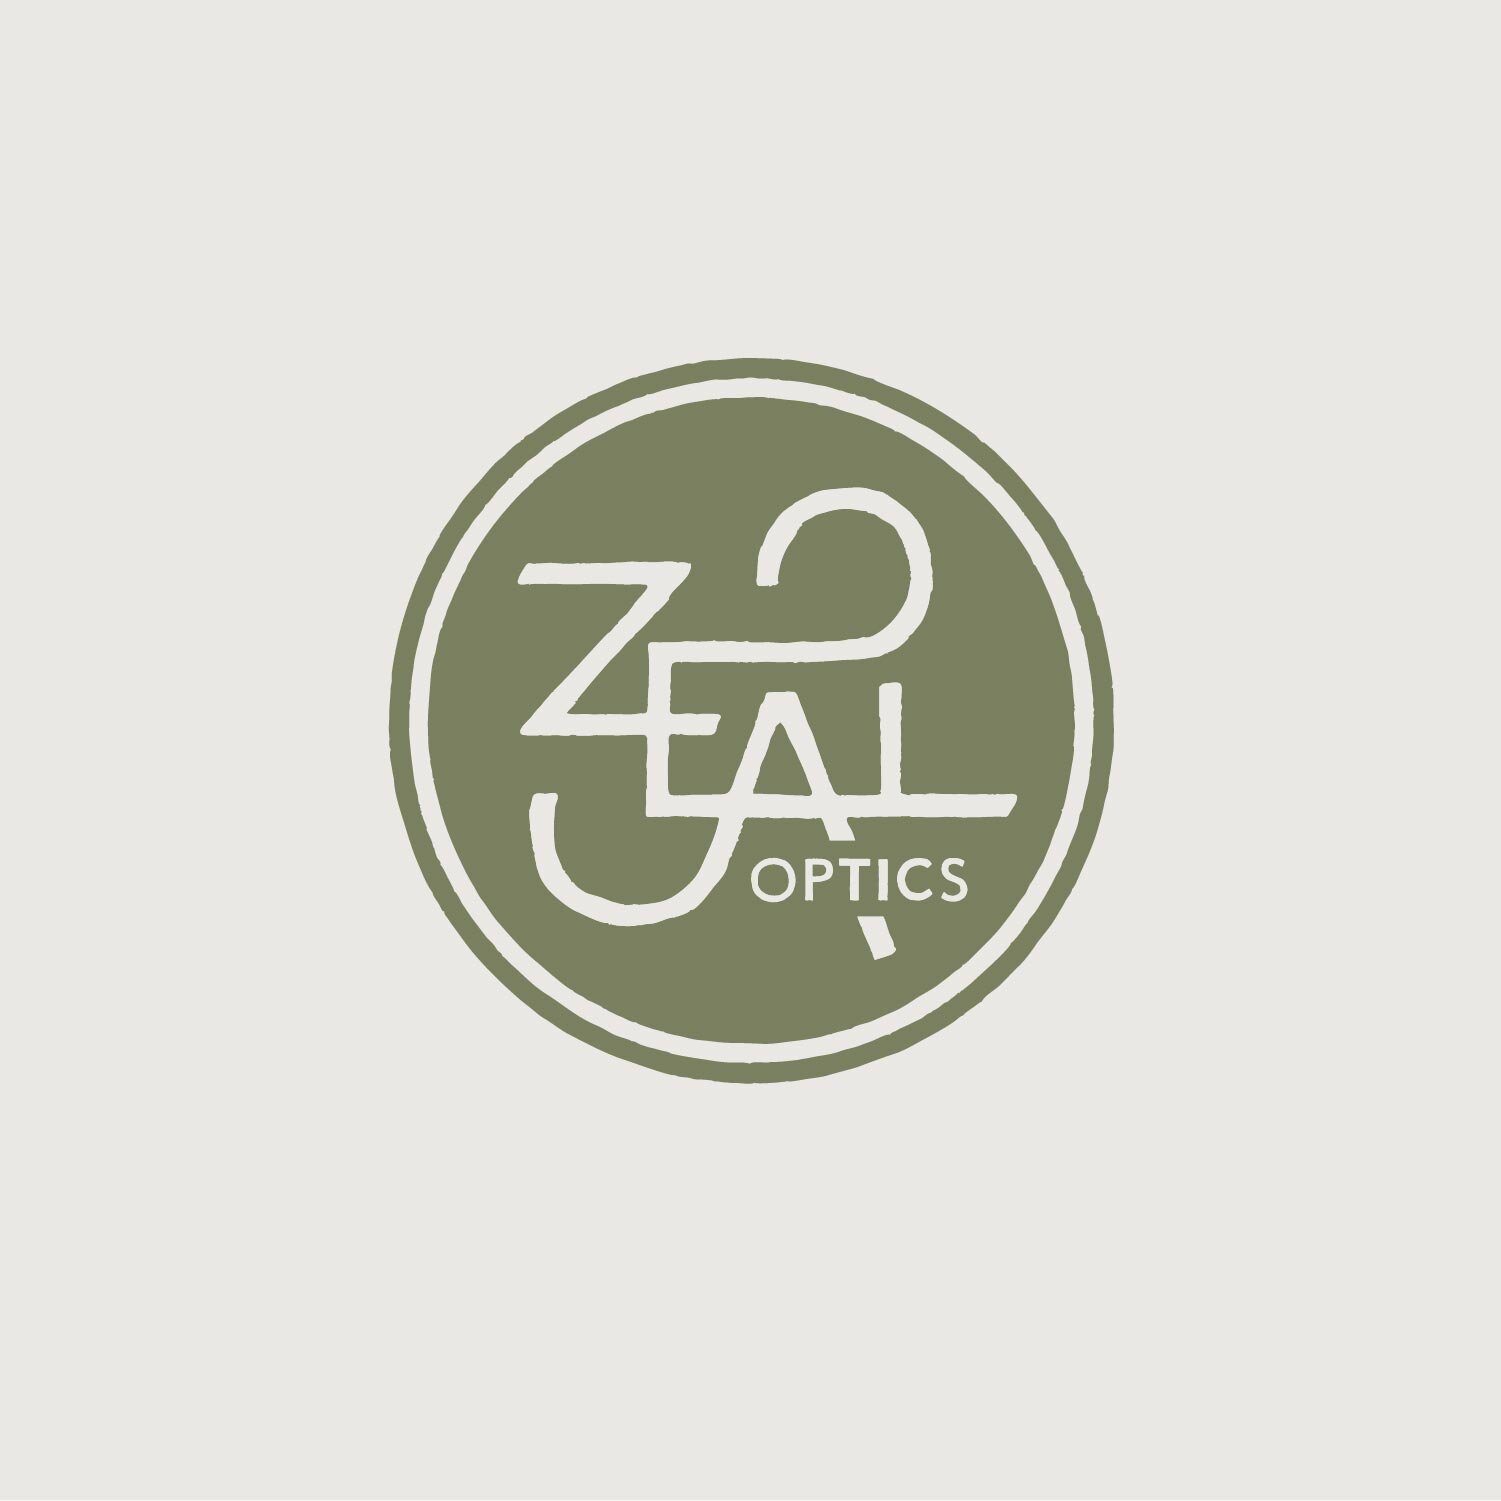 VS.Website.Logos.02a_ZealOptics.jpg